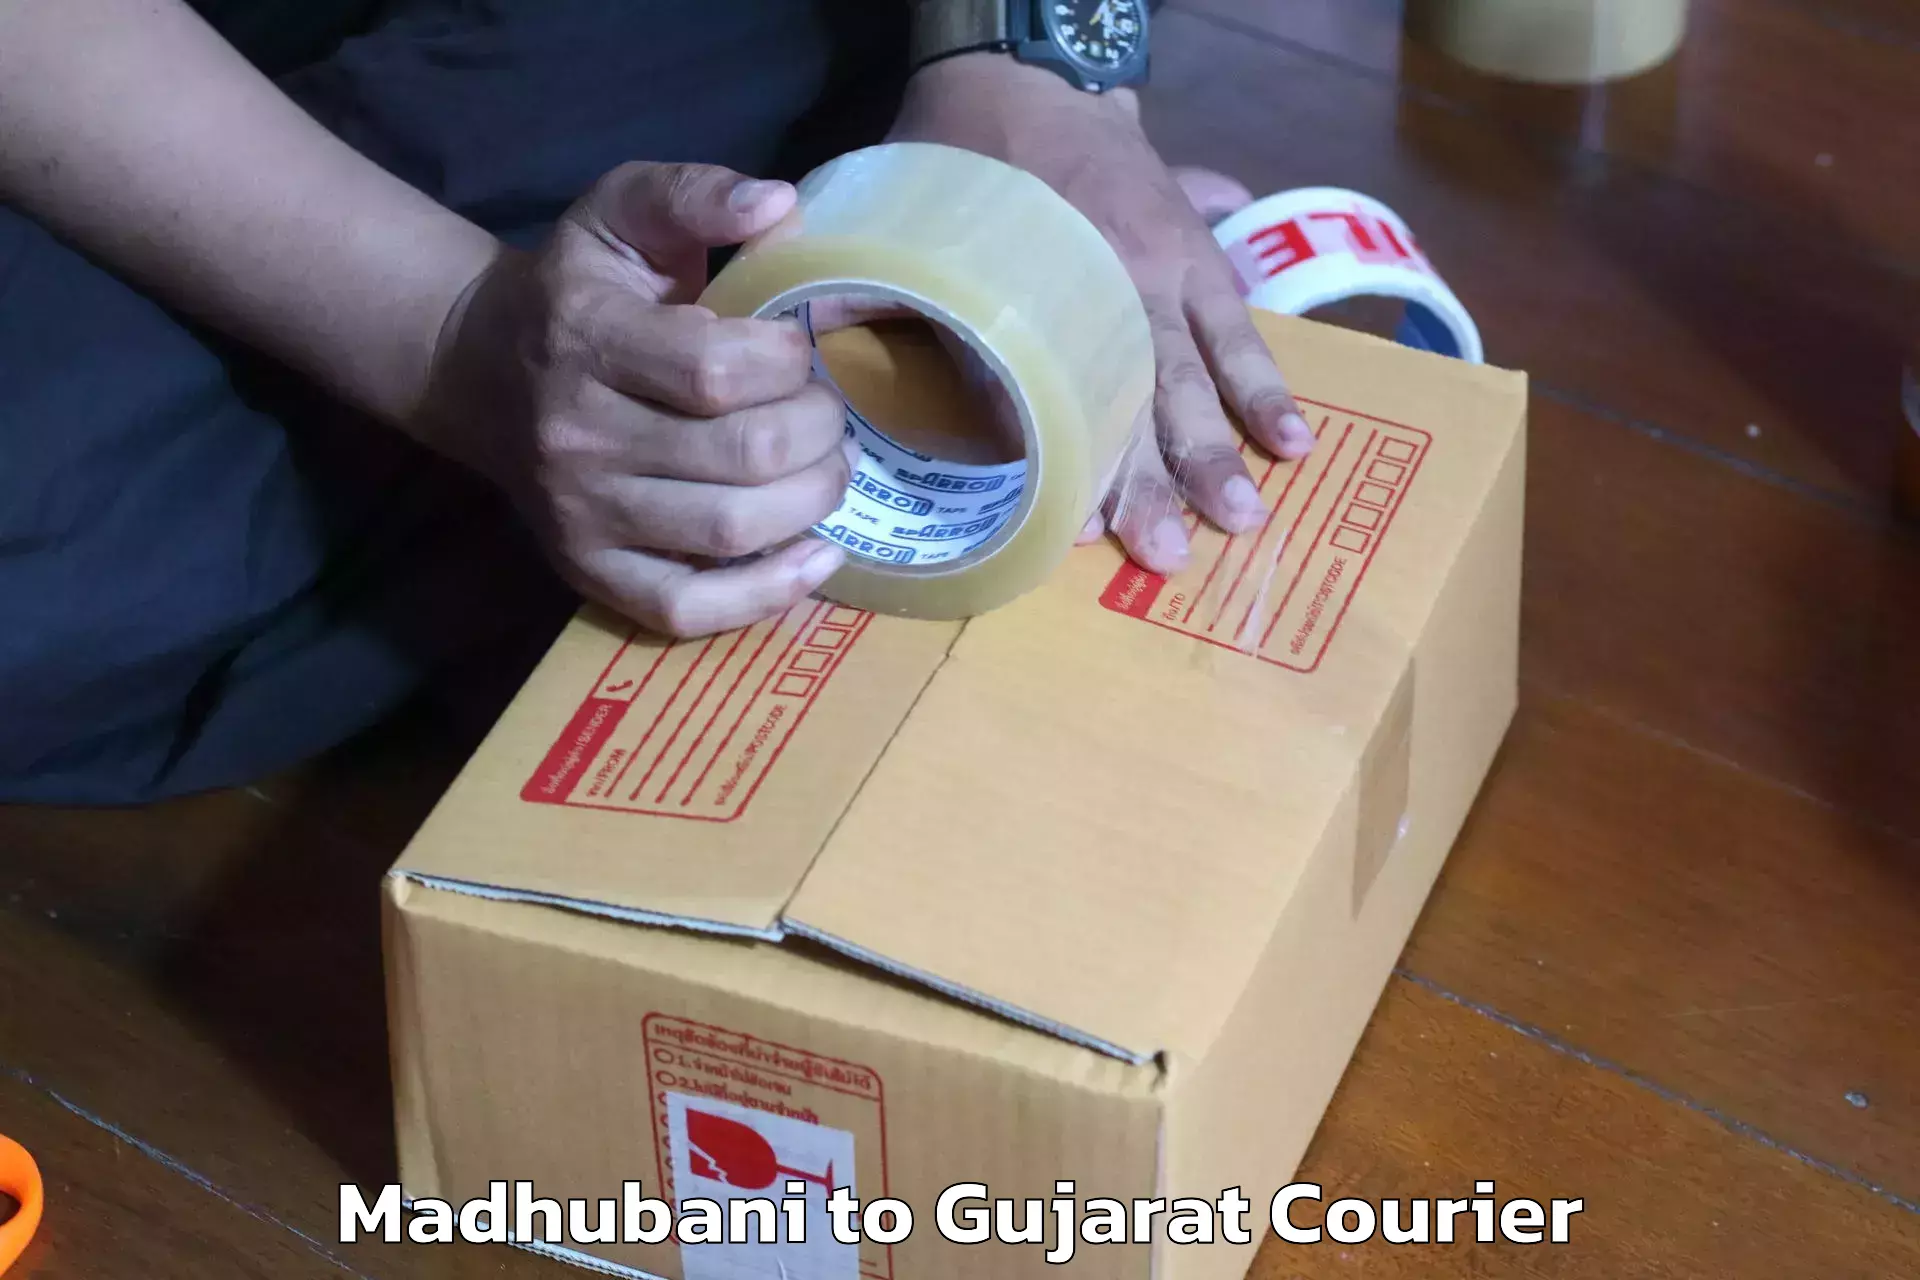 Furniture relocation experts Madhubani to Gujarat